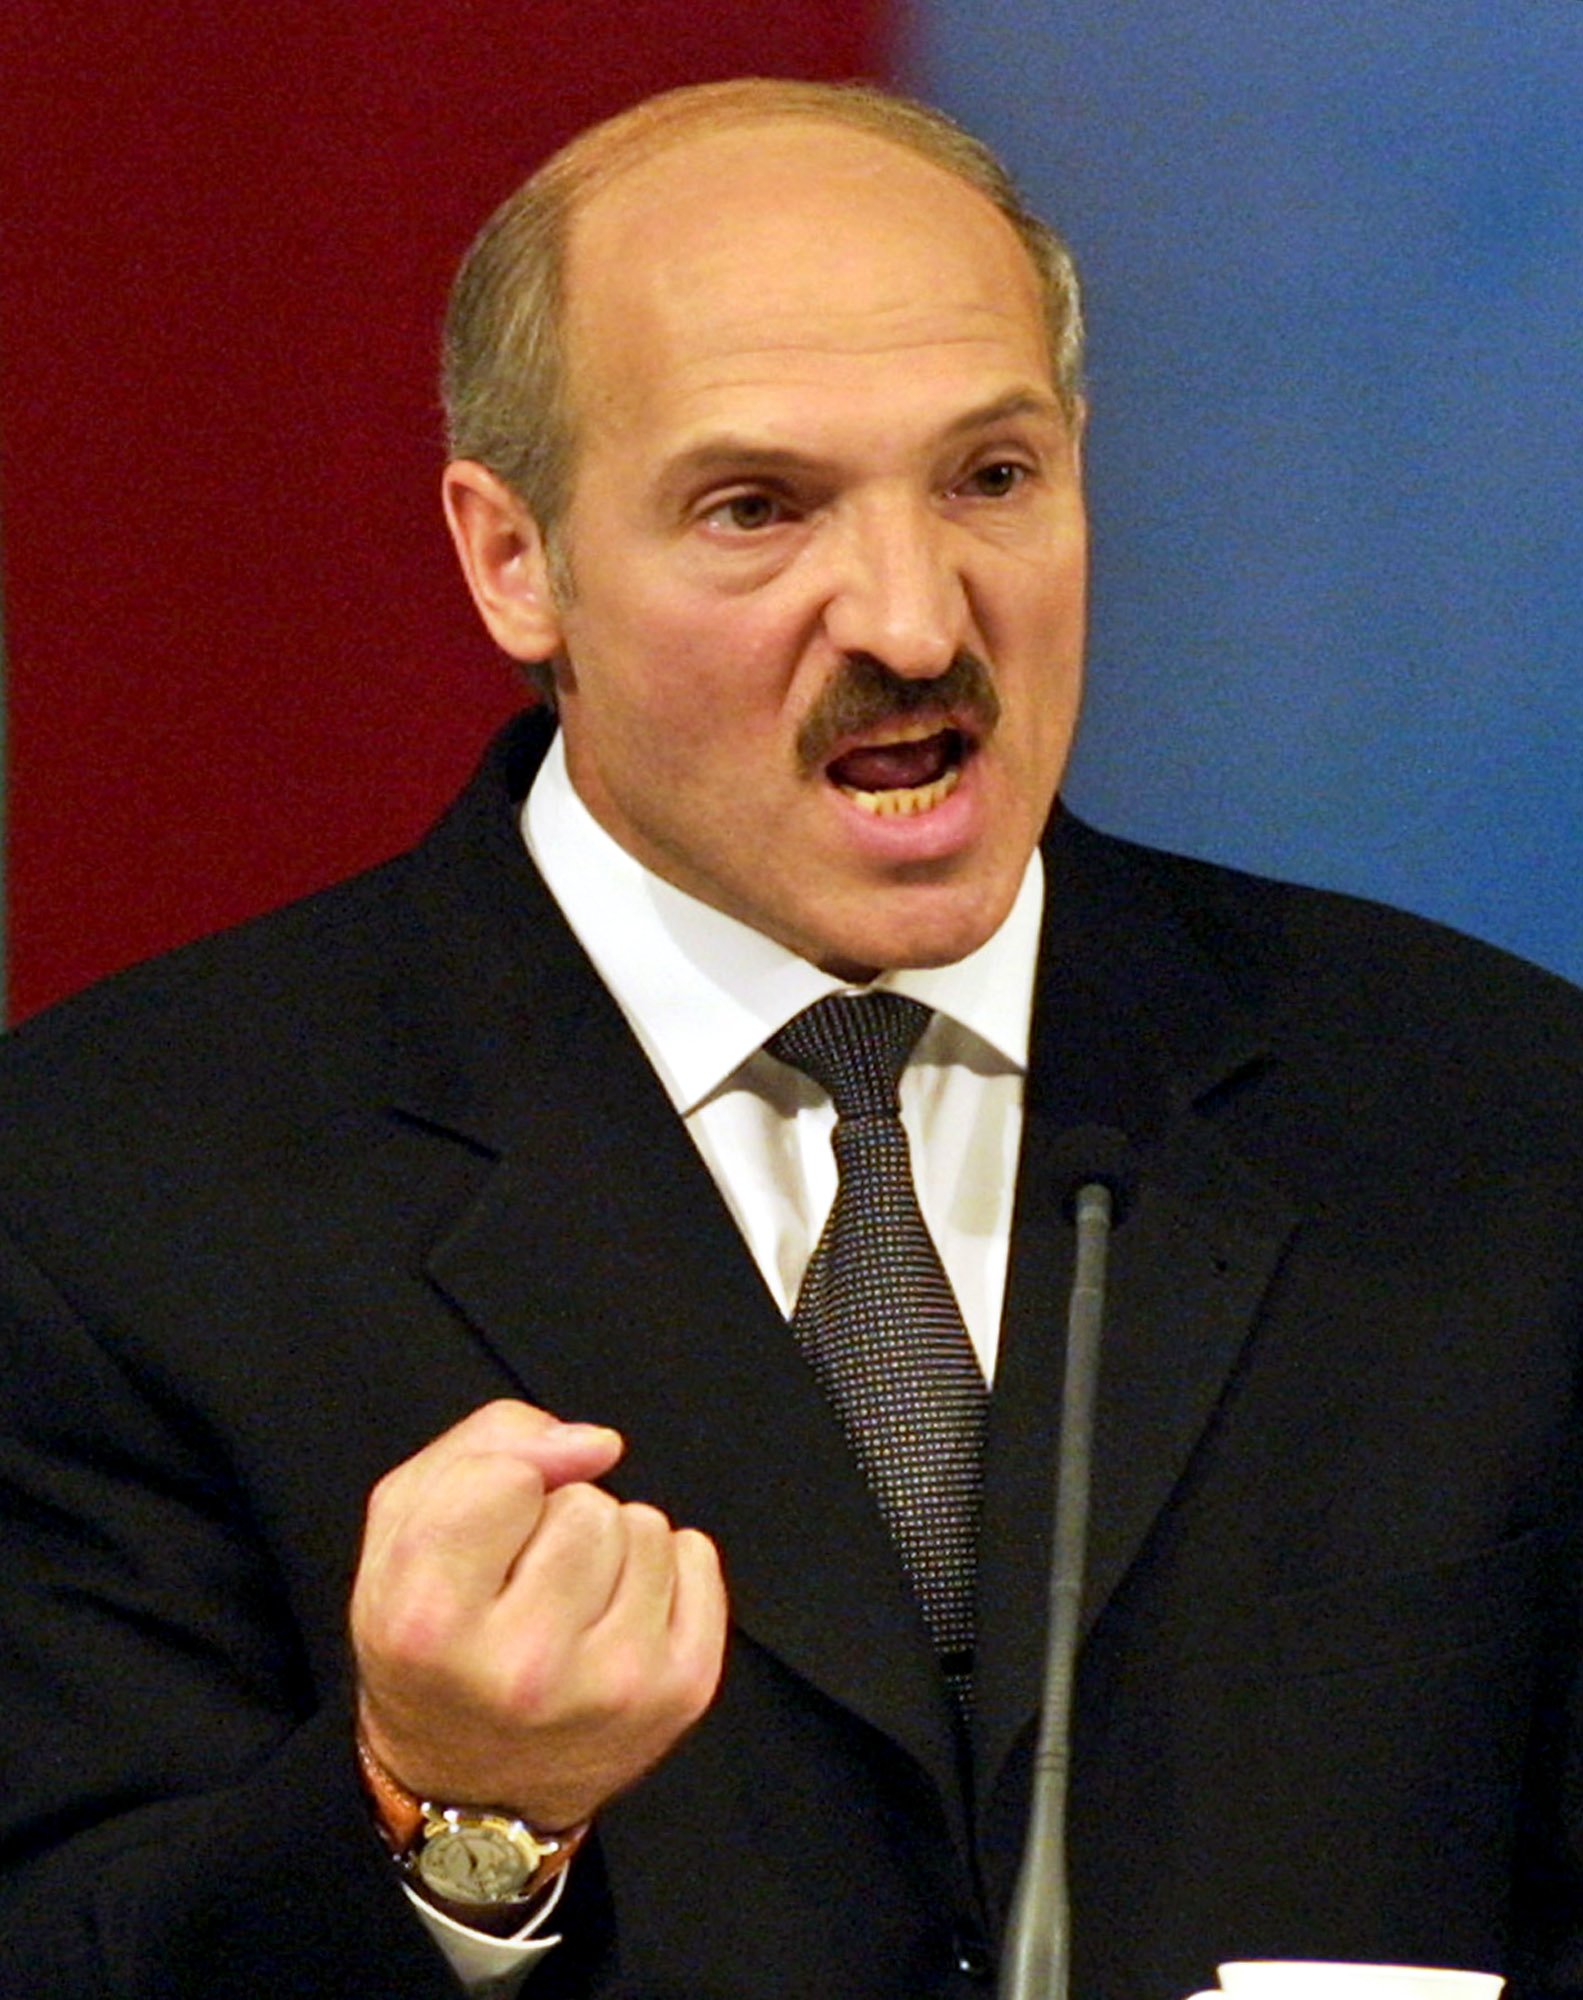 Arrangemanget blir en propagandafest för Europas siste diktator, Aleksandr Lukasjenko, menar Szyber.